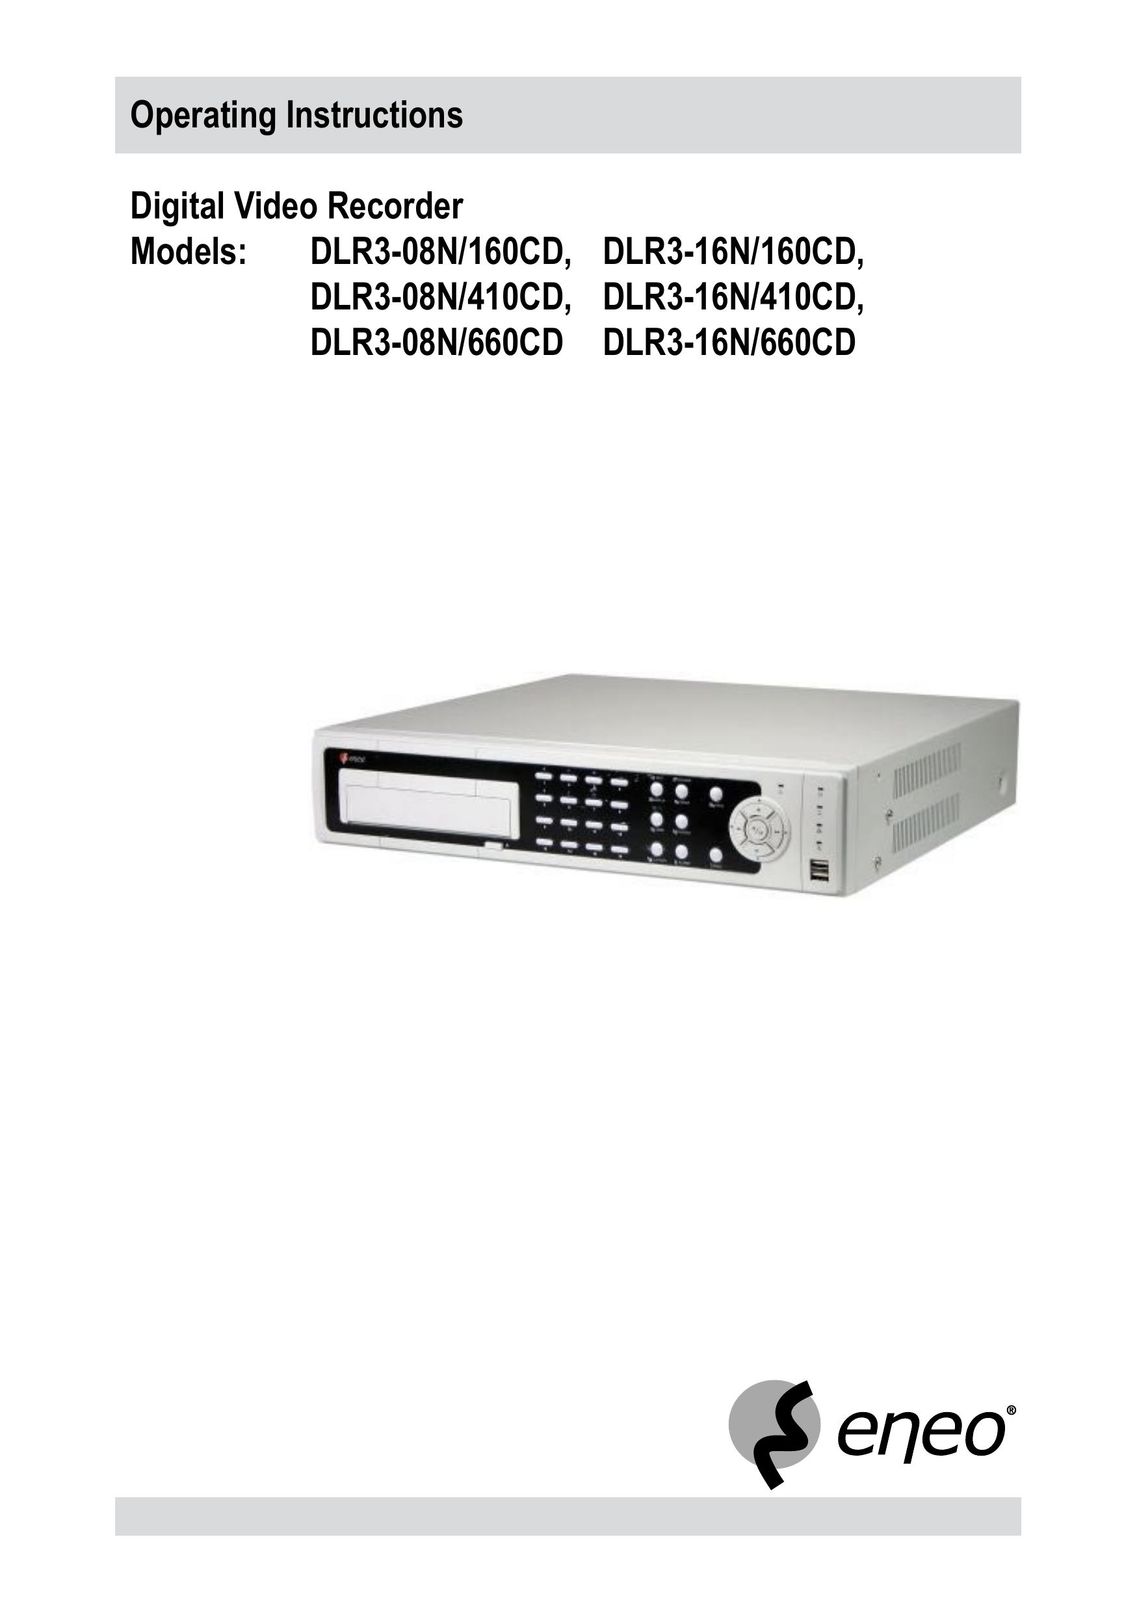 Epson DLR3-16N/160CD DVR User Manual